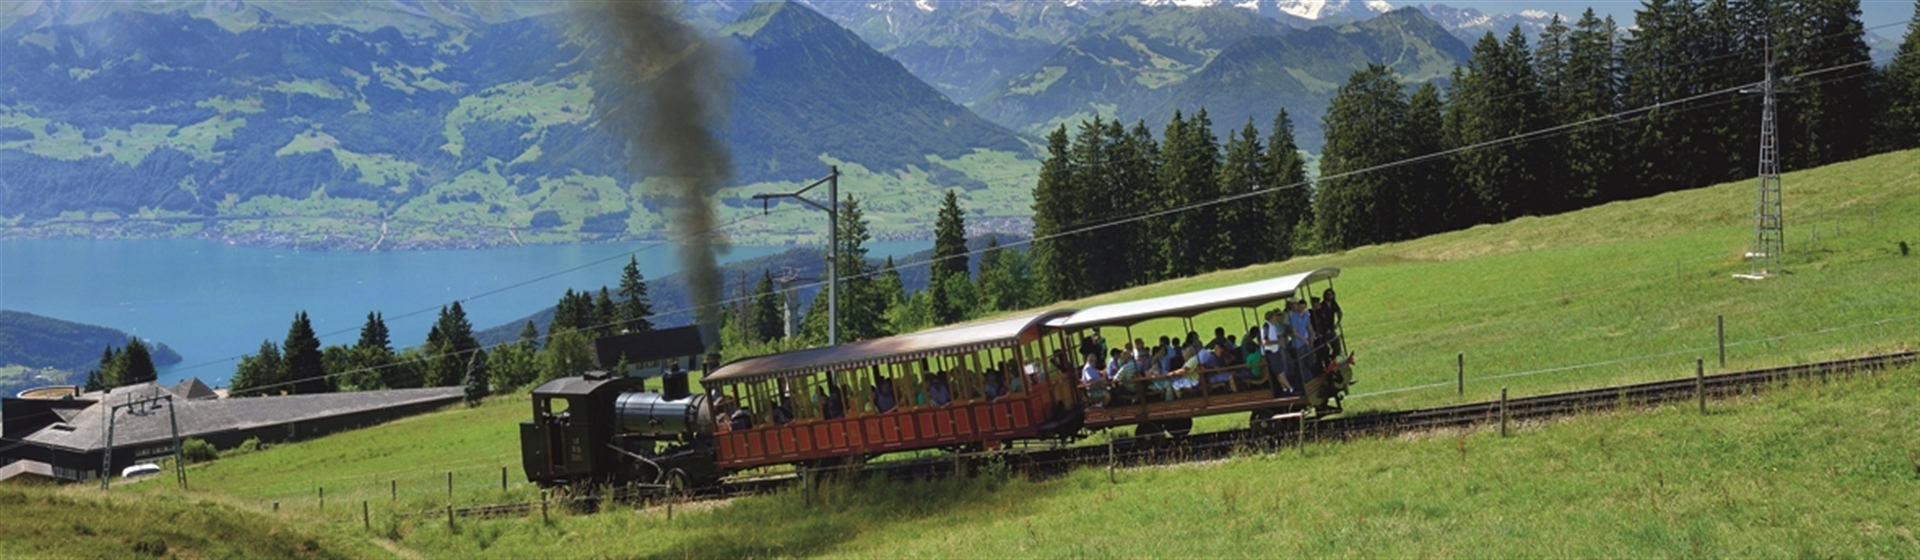 <img src="tourpageheaders/rigi.jpeg" alt="Brienz Rothorn Railway"/>